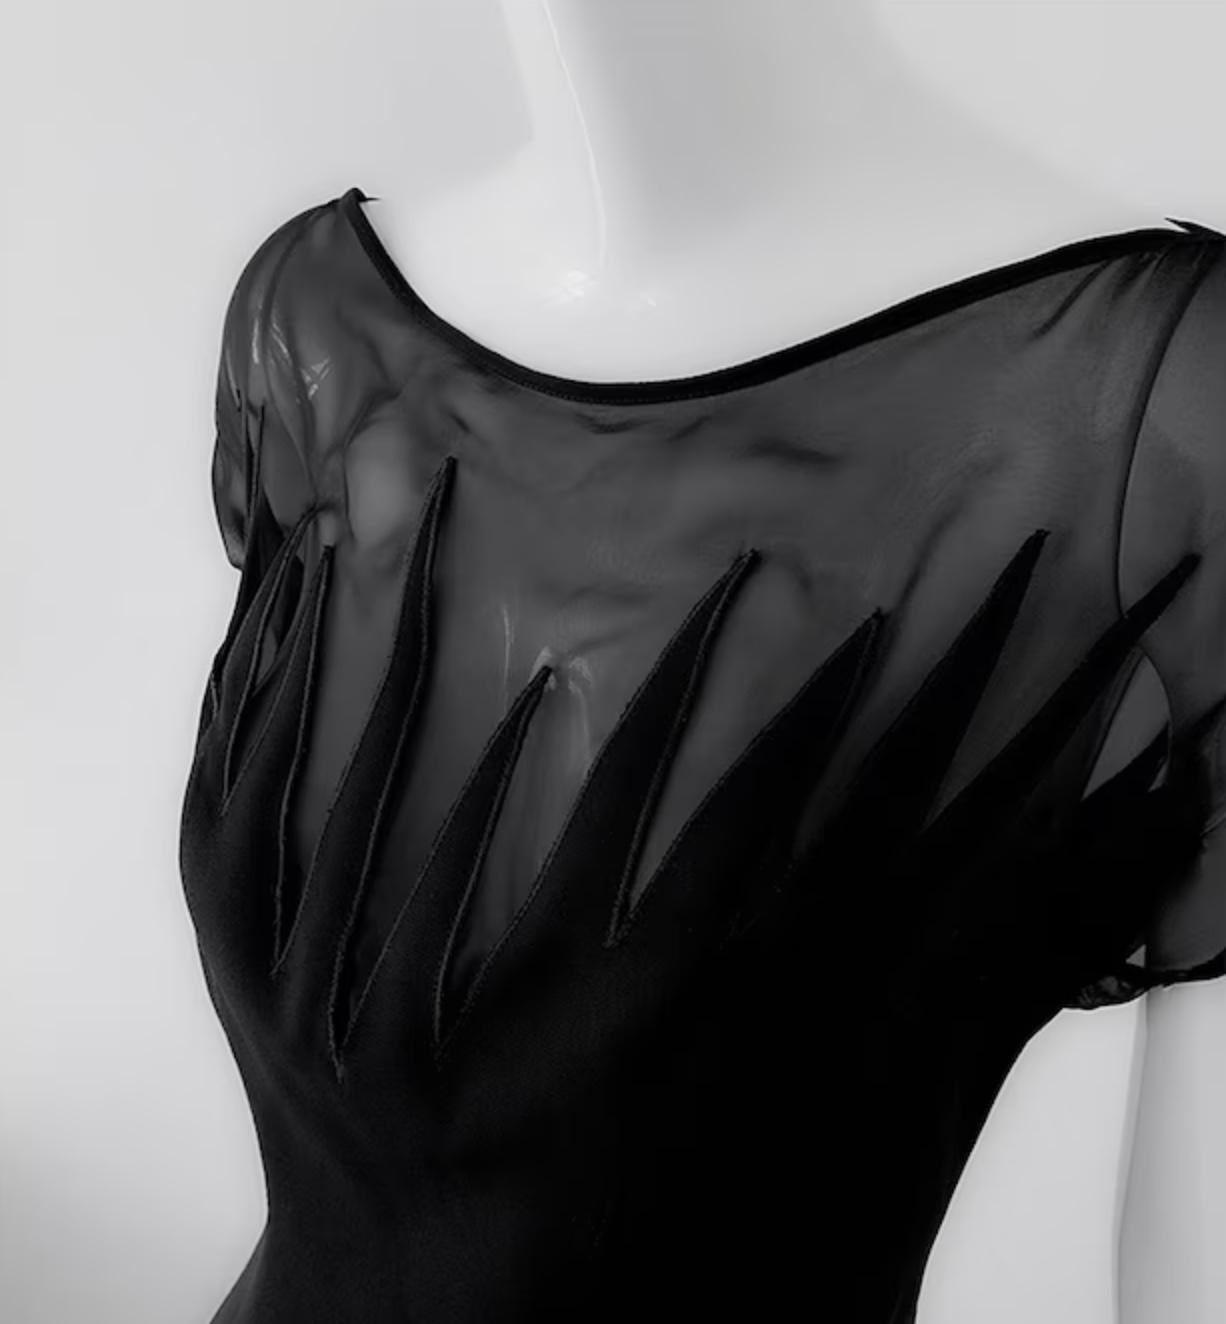 Devine Thierry Mugler Runway Dress Goddess Black Semi Sheer Evening Gown  For Sale 1